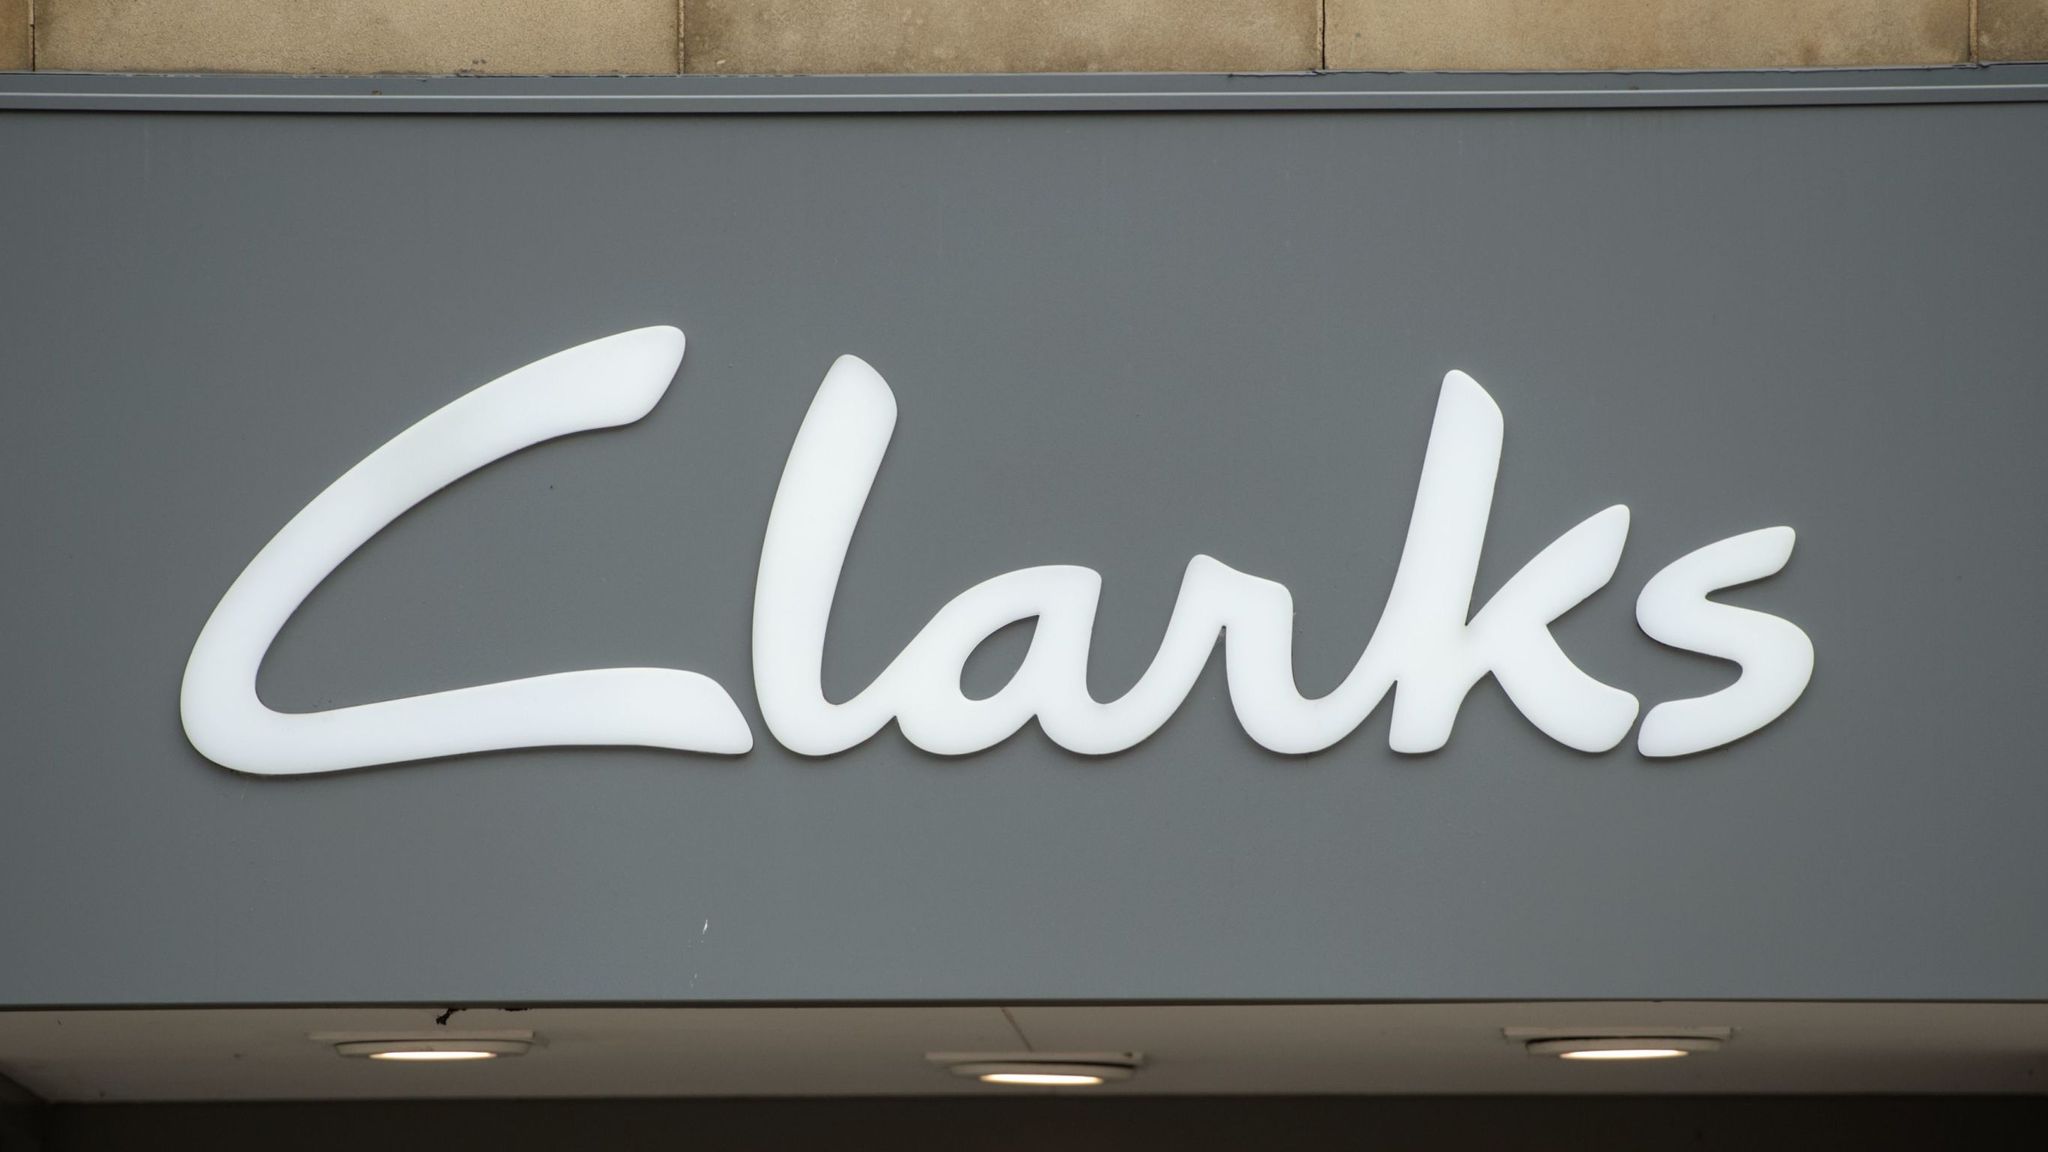 clarks brand values